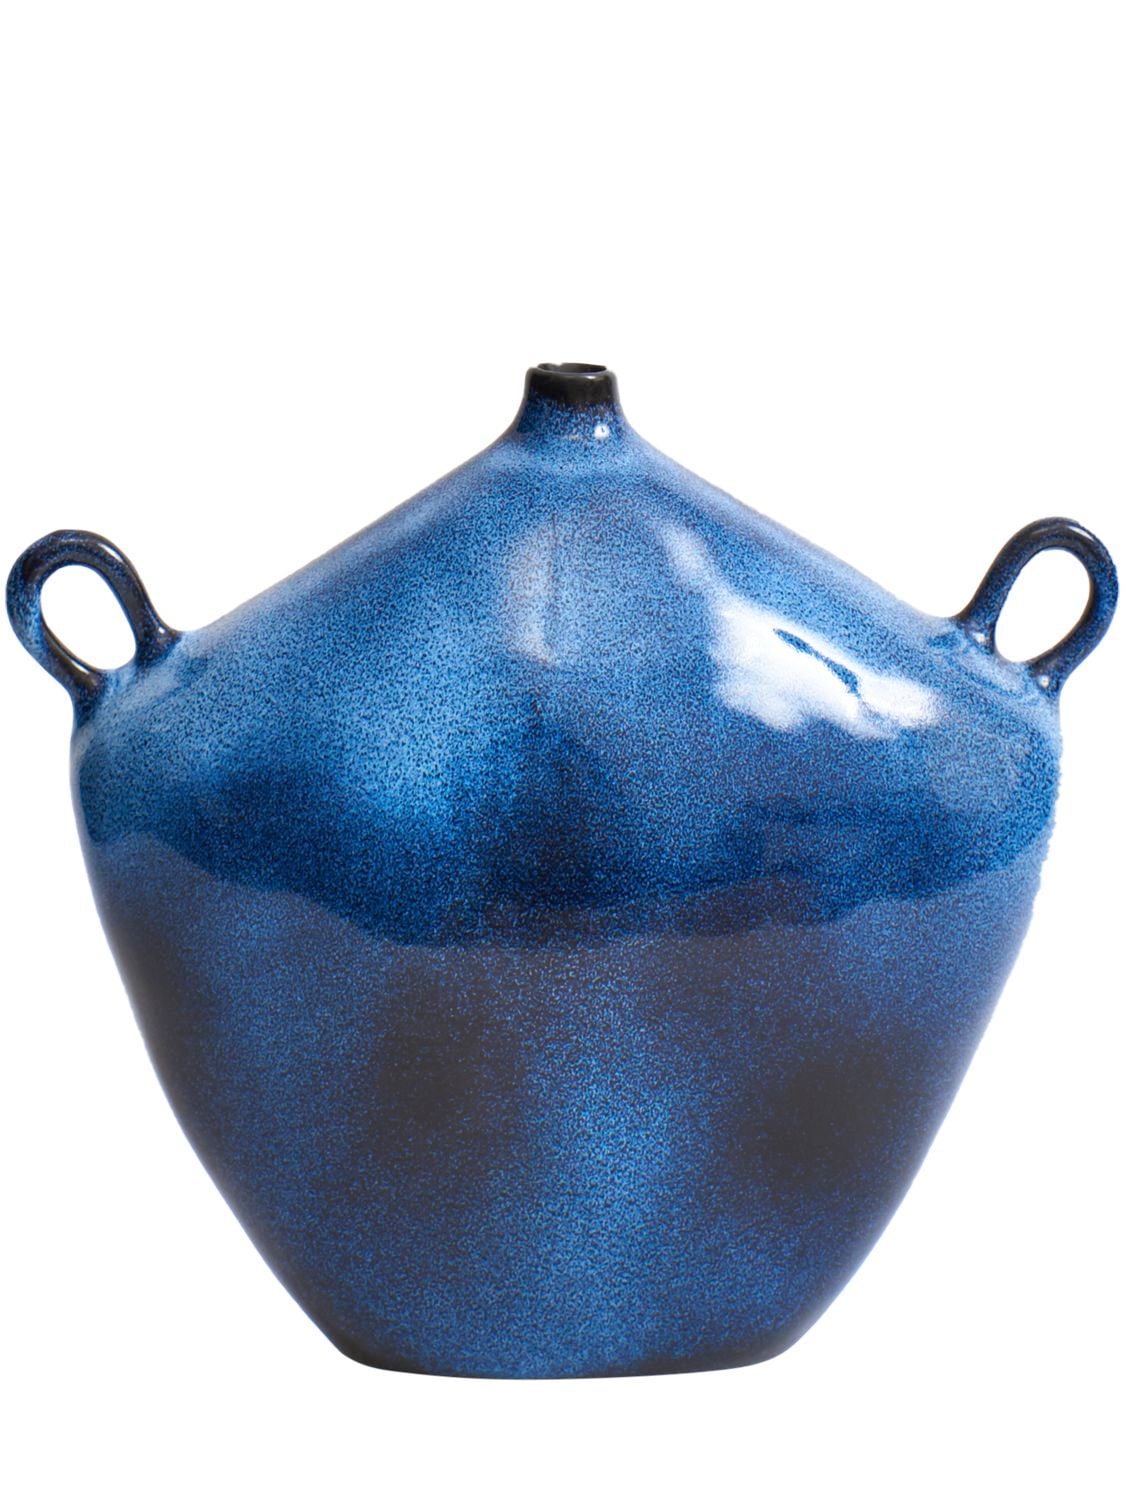 Maria Vessel 花瓶